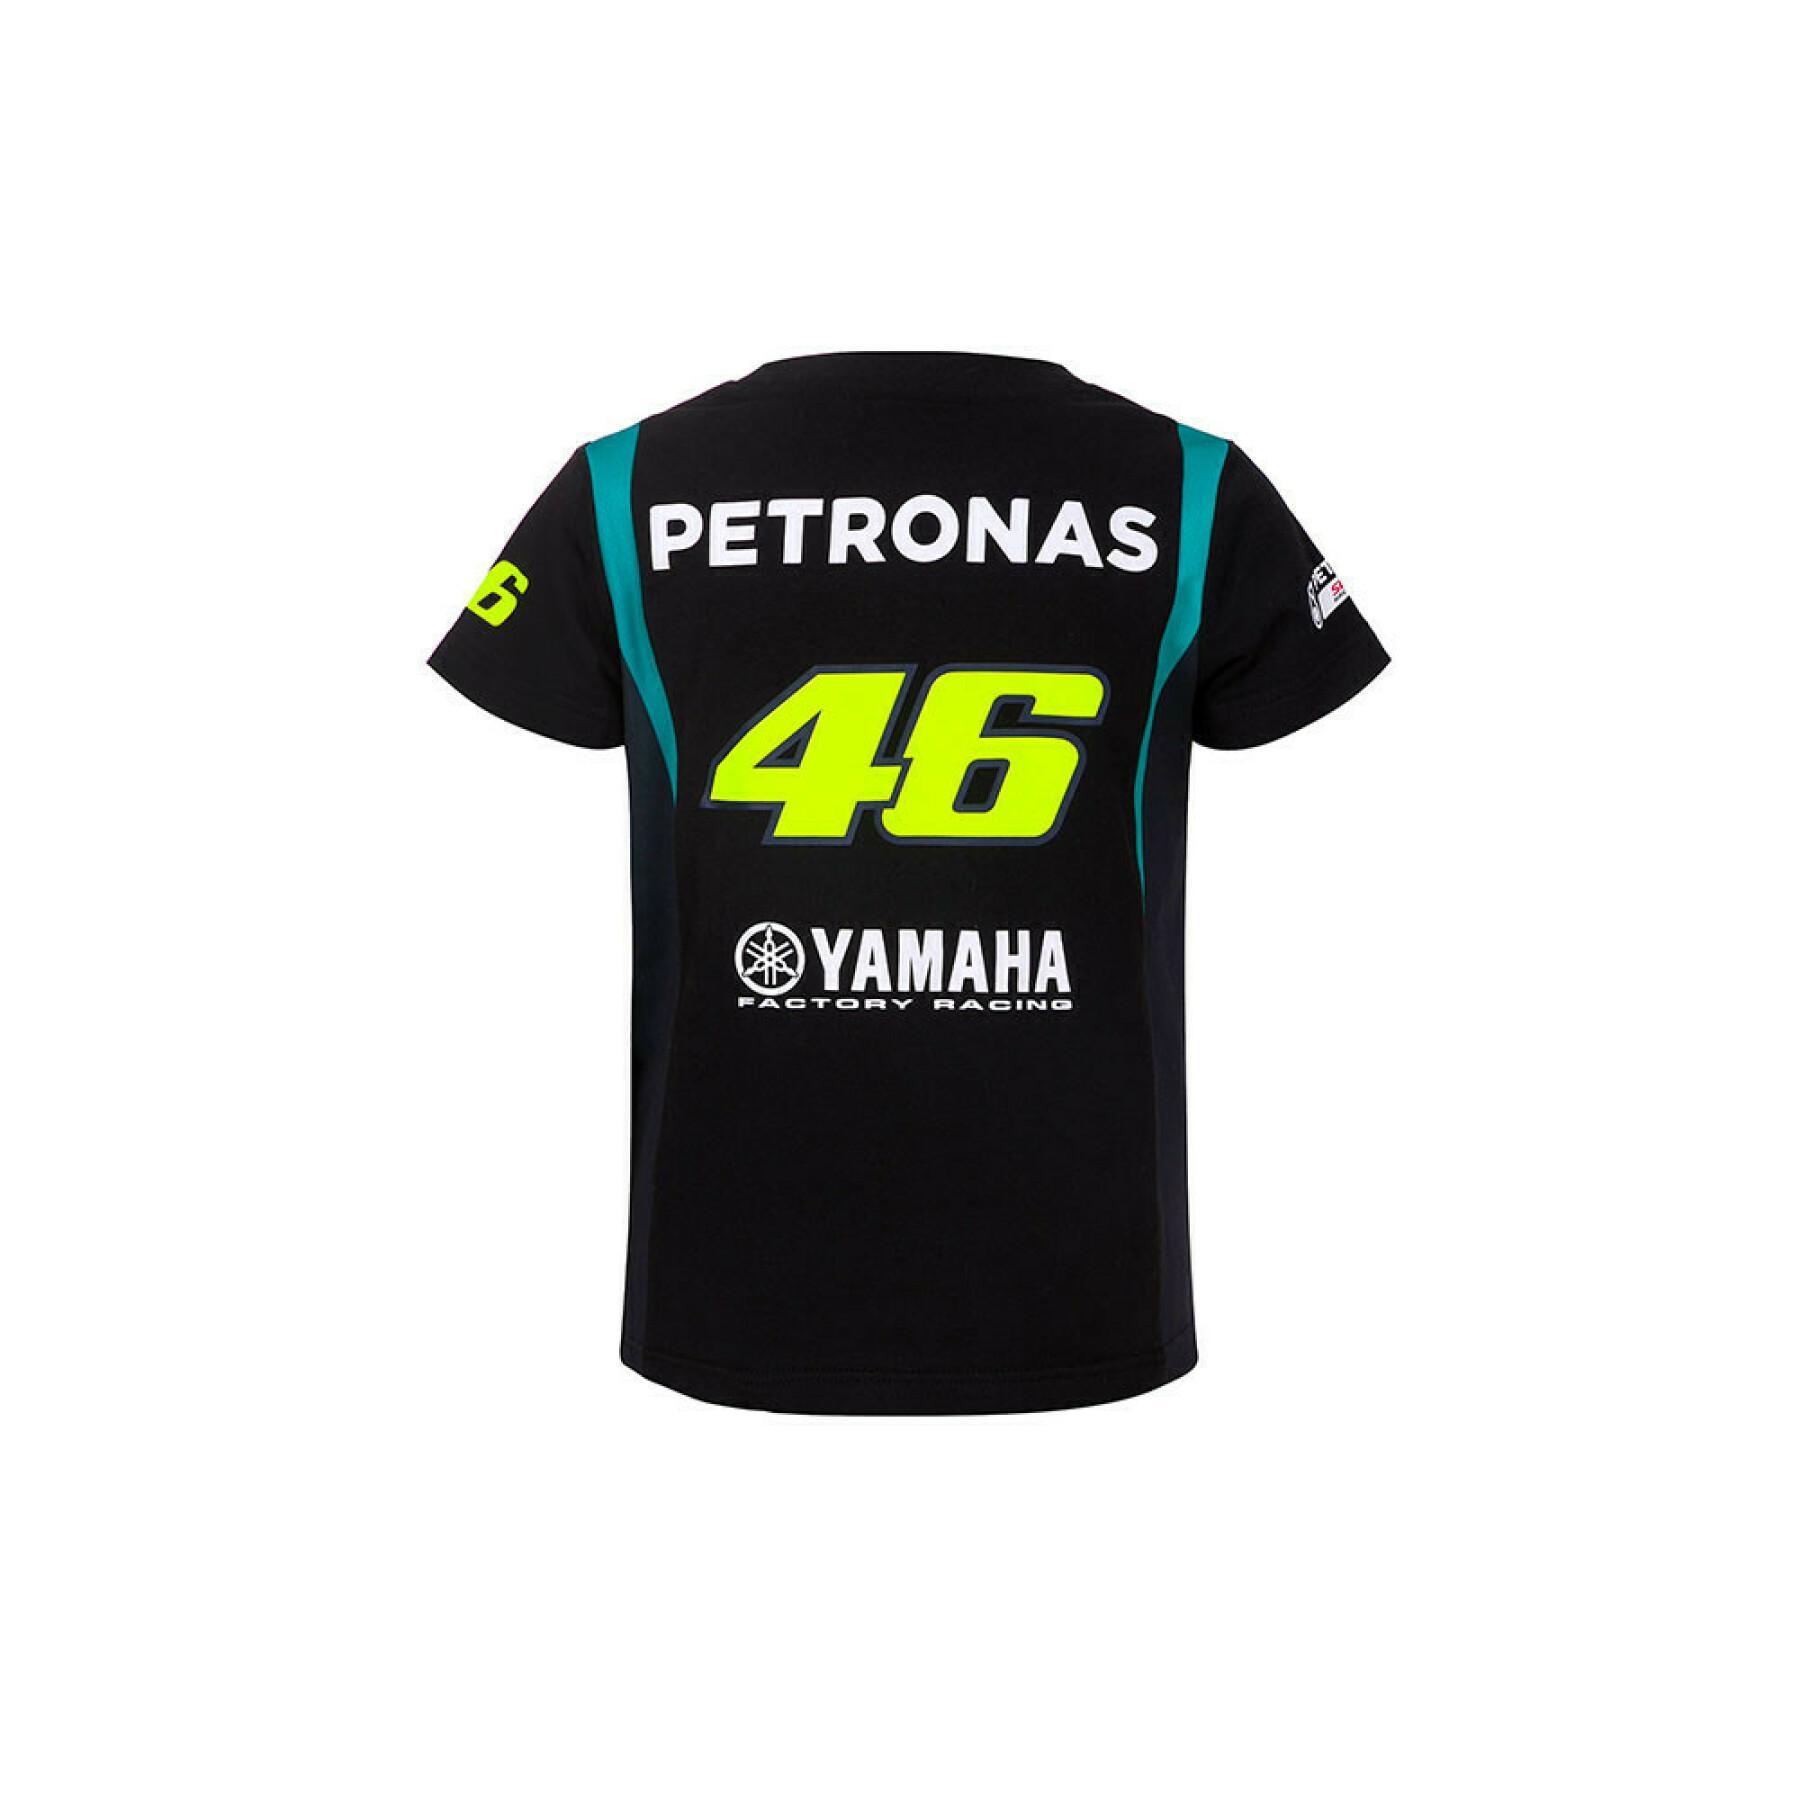 Child's T-shirt VRl46 Petronas dual